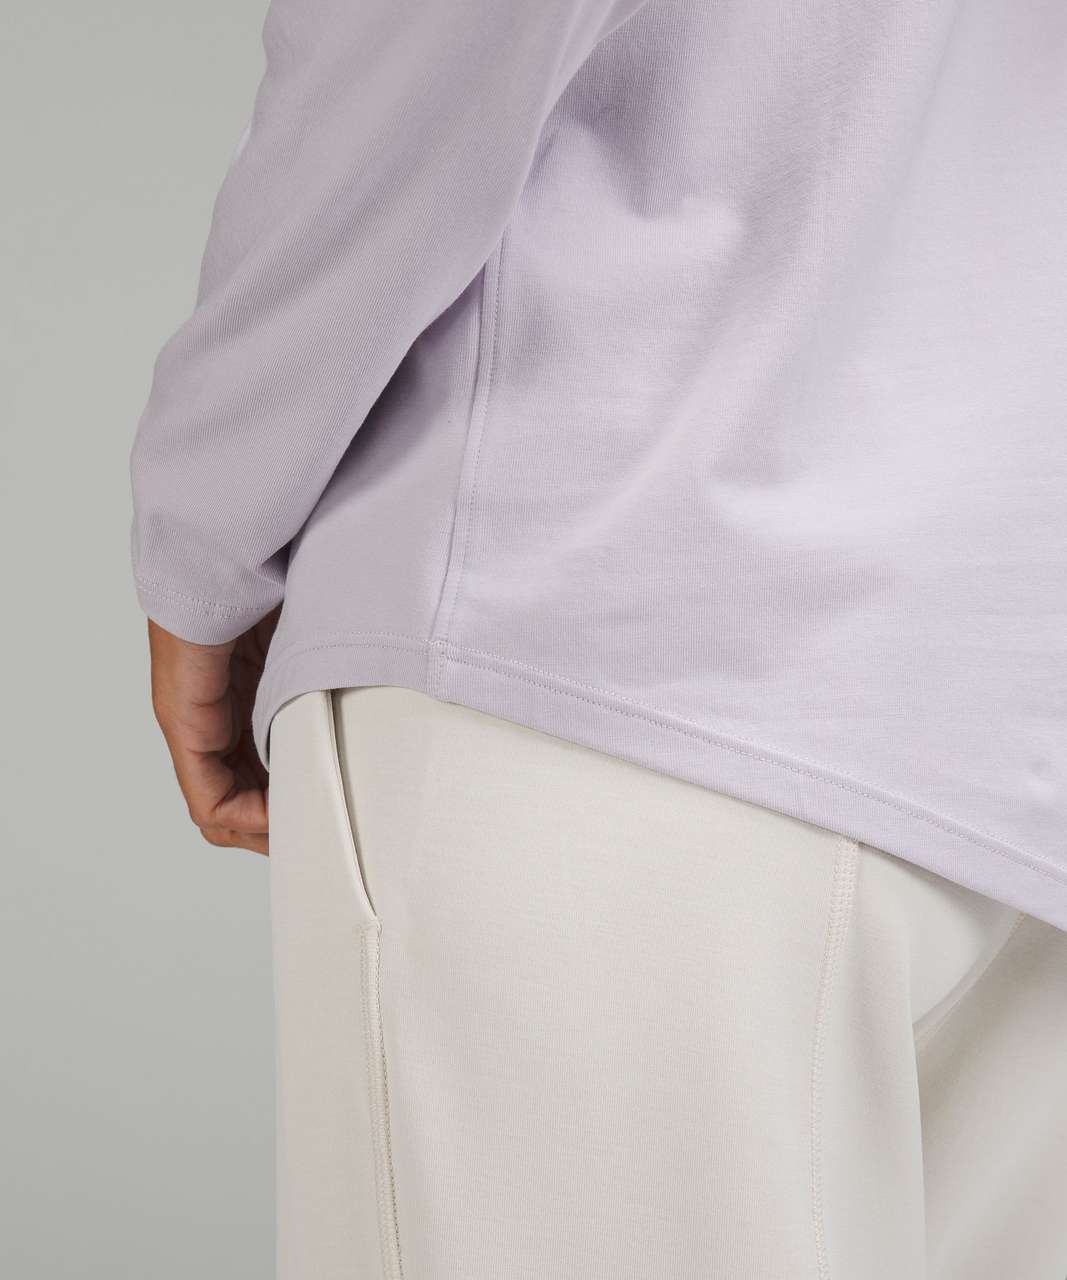 Lululemon Love Long Sleeve Shirt - Faint Lavender